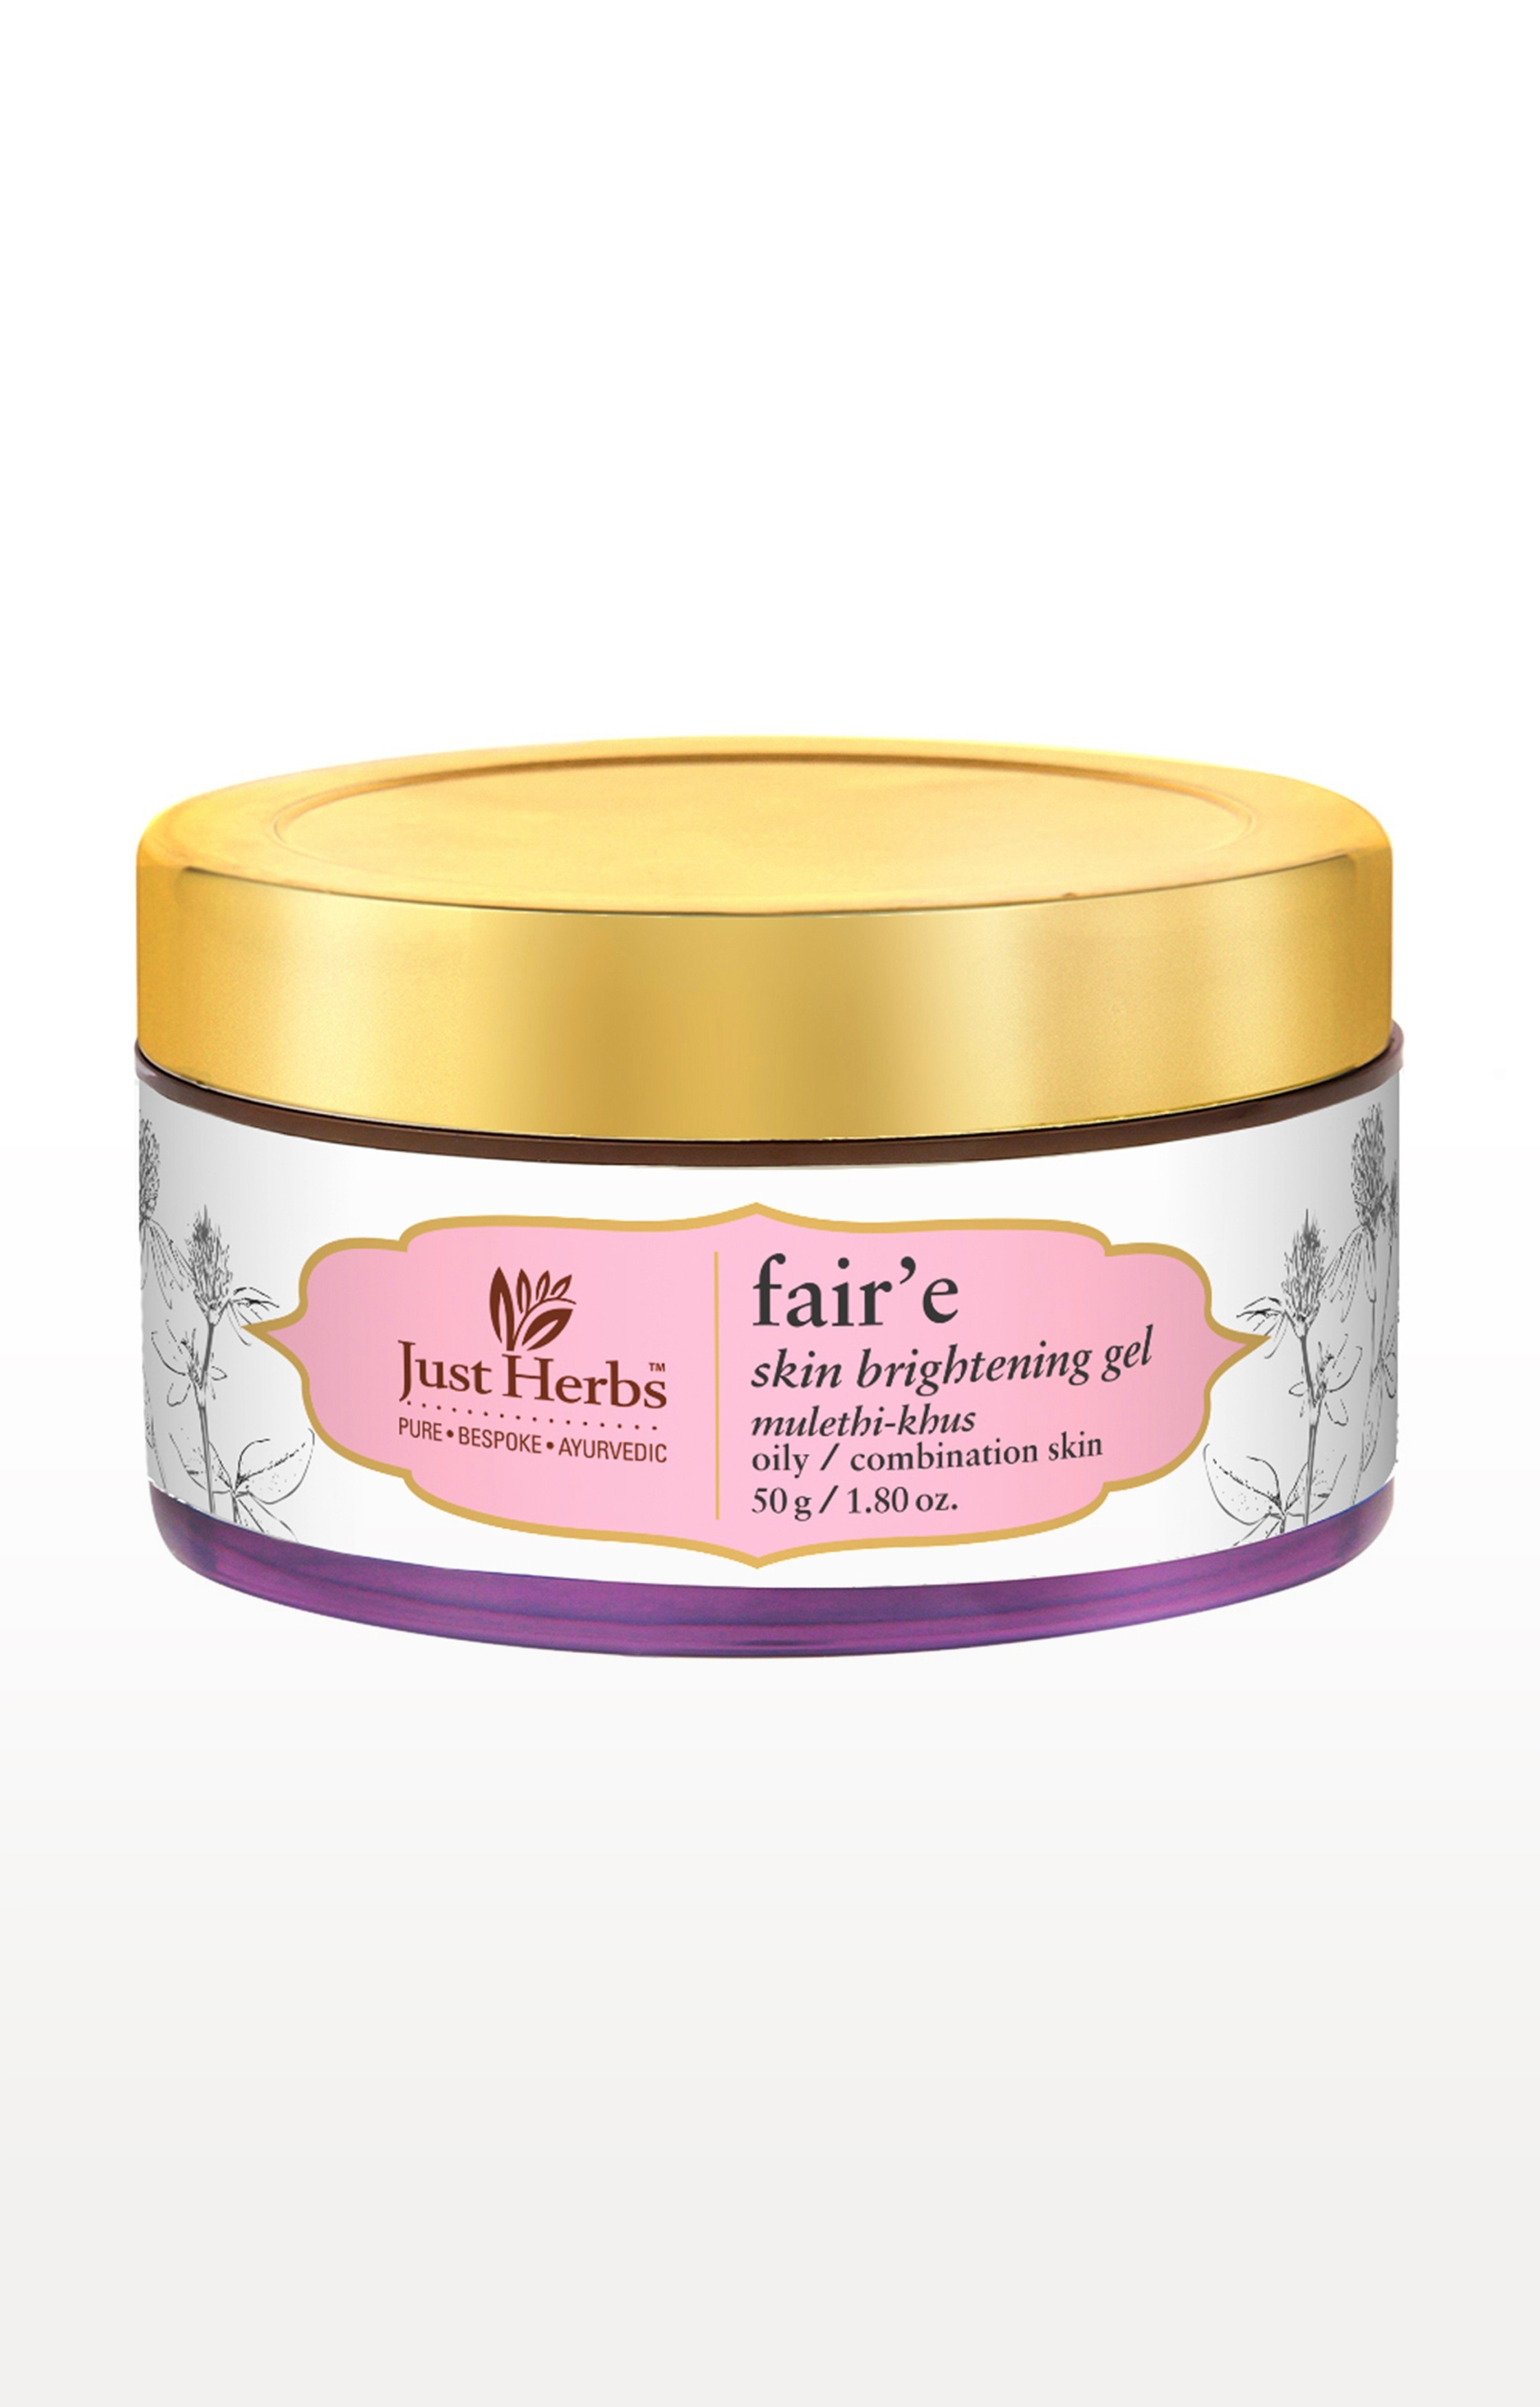 Just Herbs | Fair'e Mulethi-Khus Skin Brightening Gel